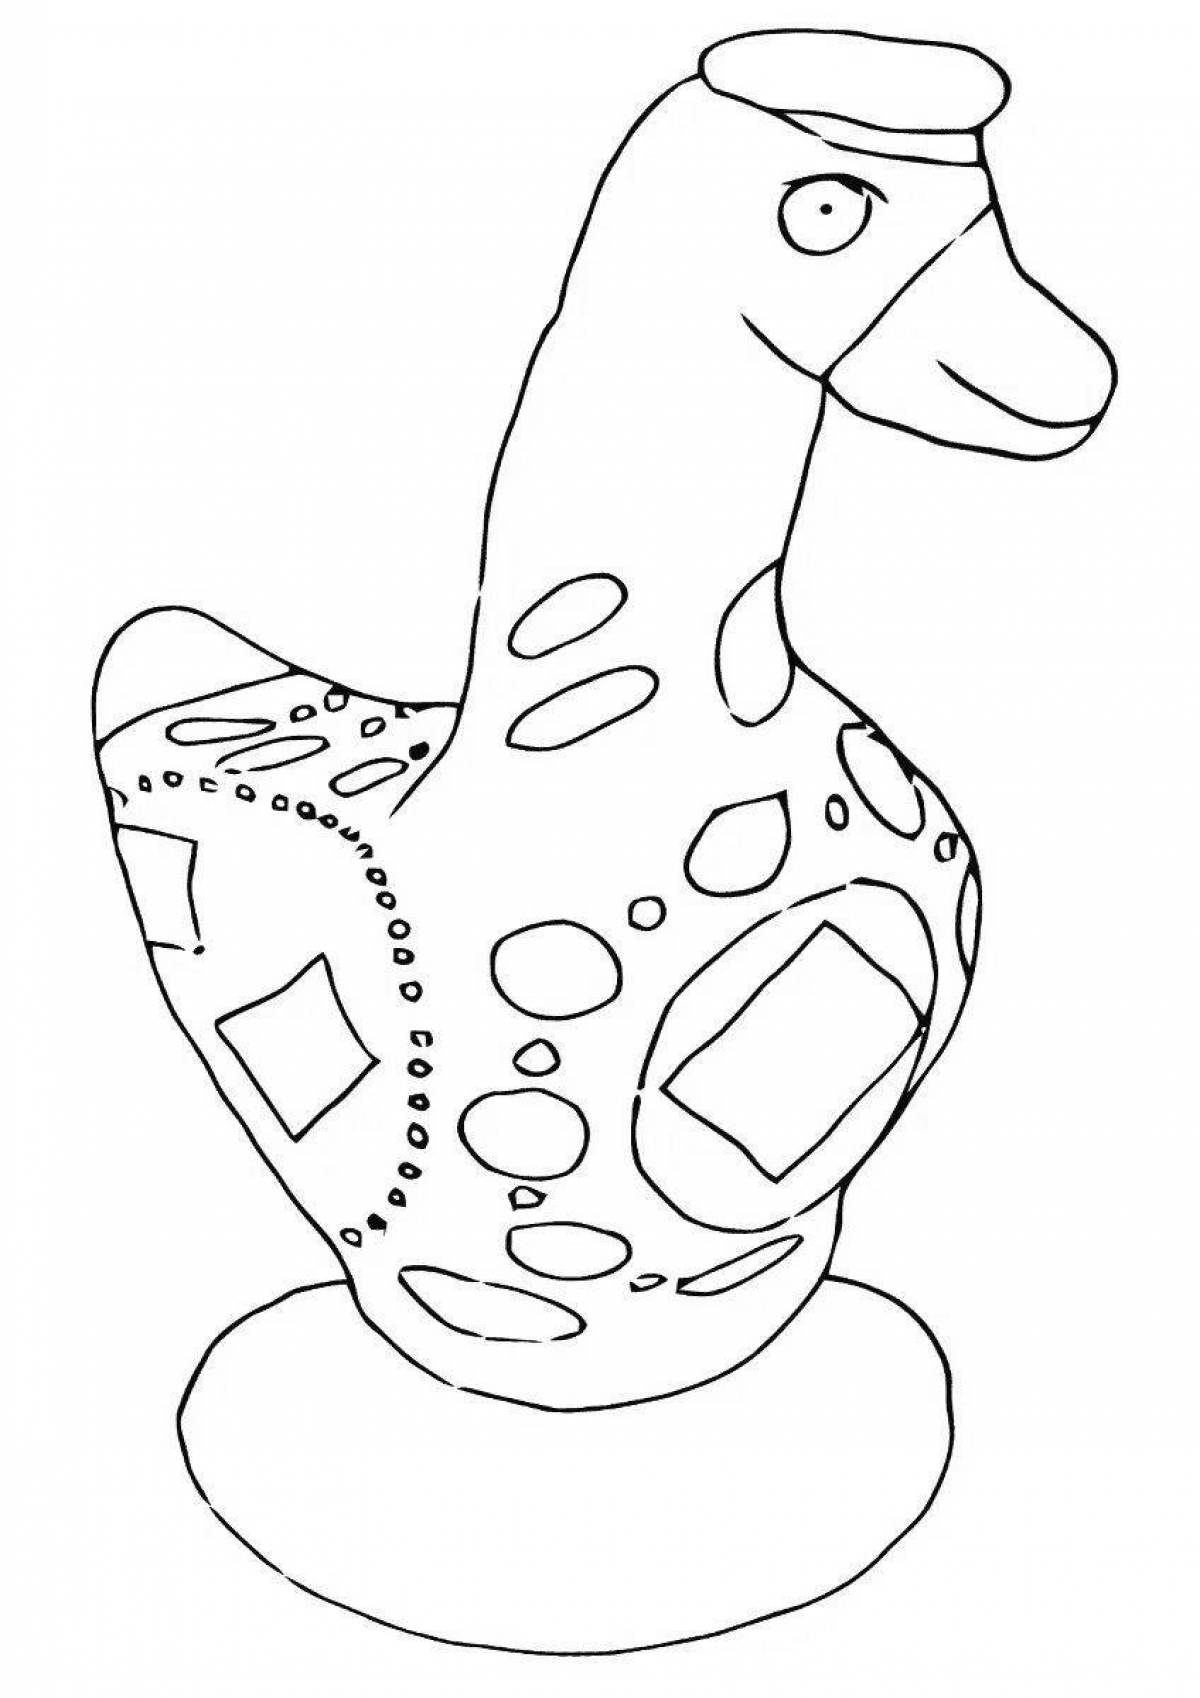 Каргопольская глиняная игрушка раскраска